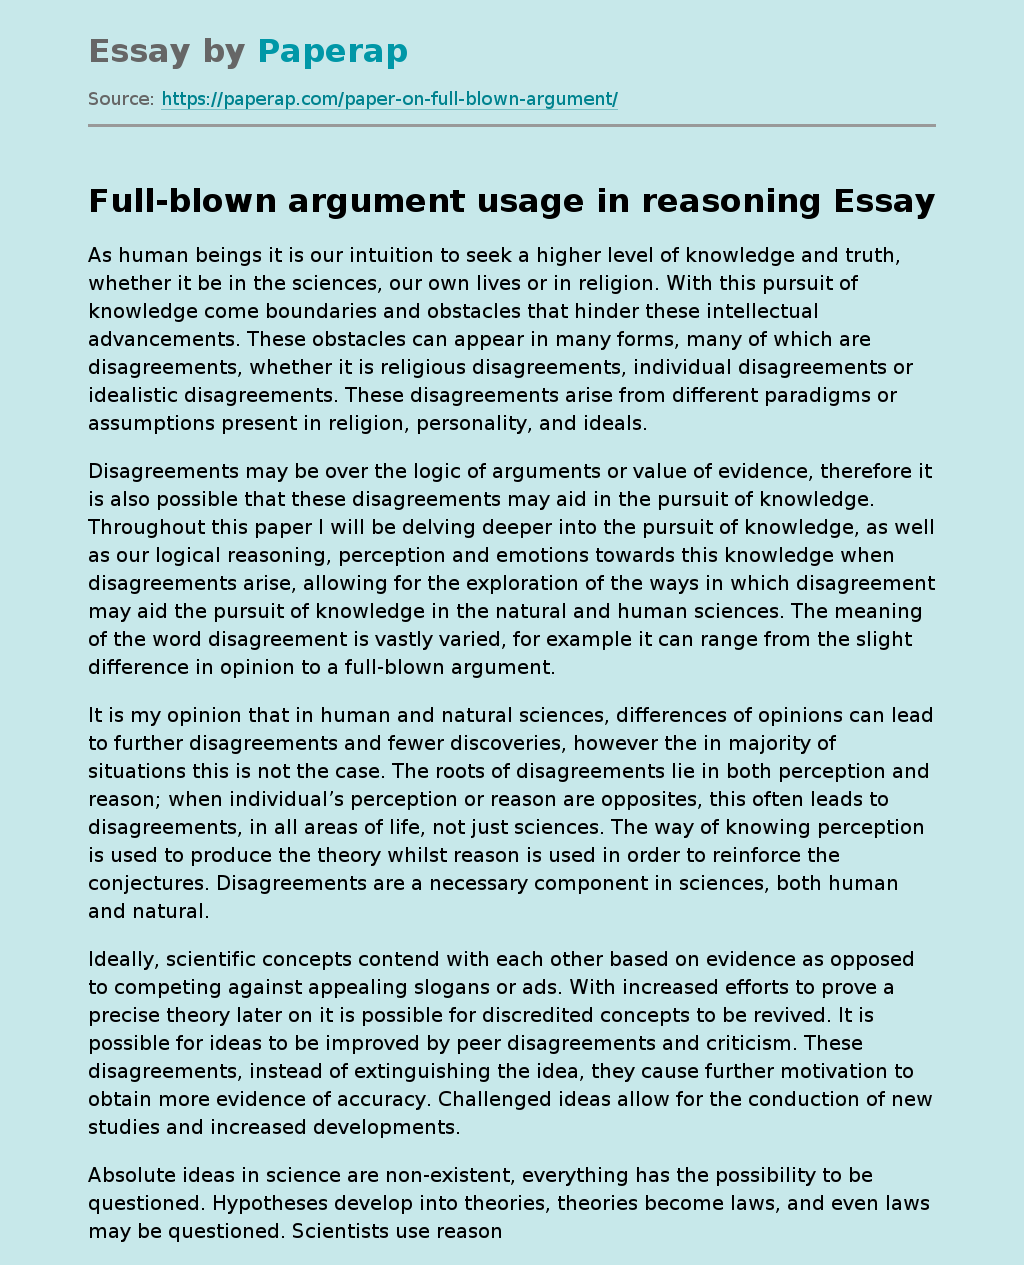 Full-blown argument usage in reasoning